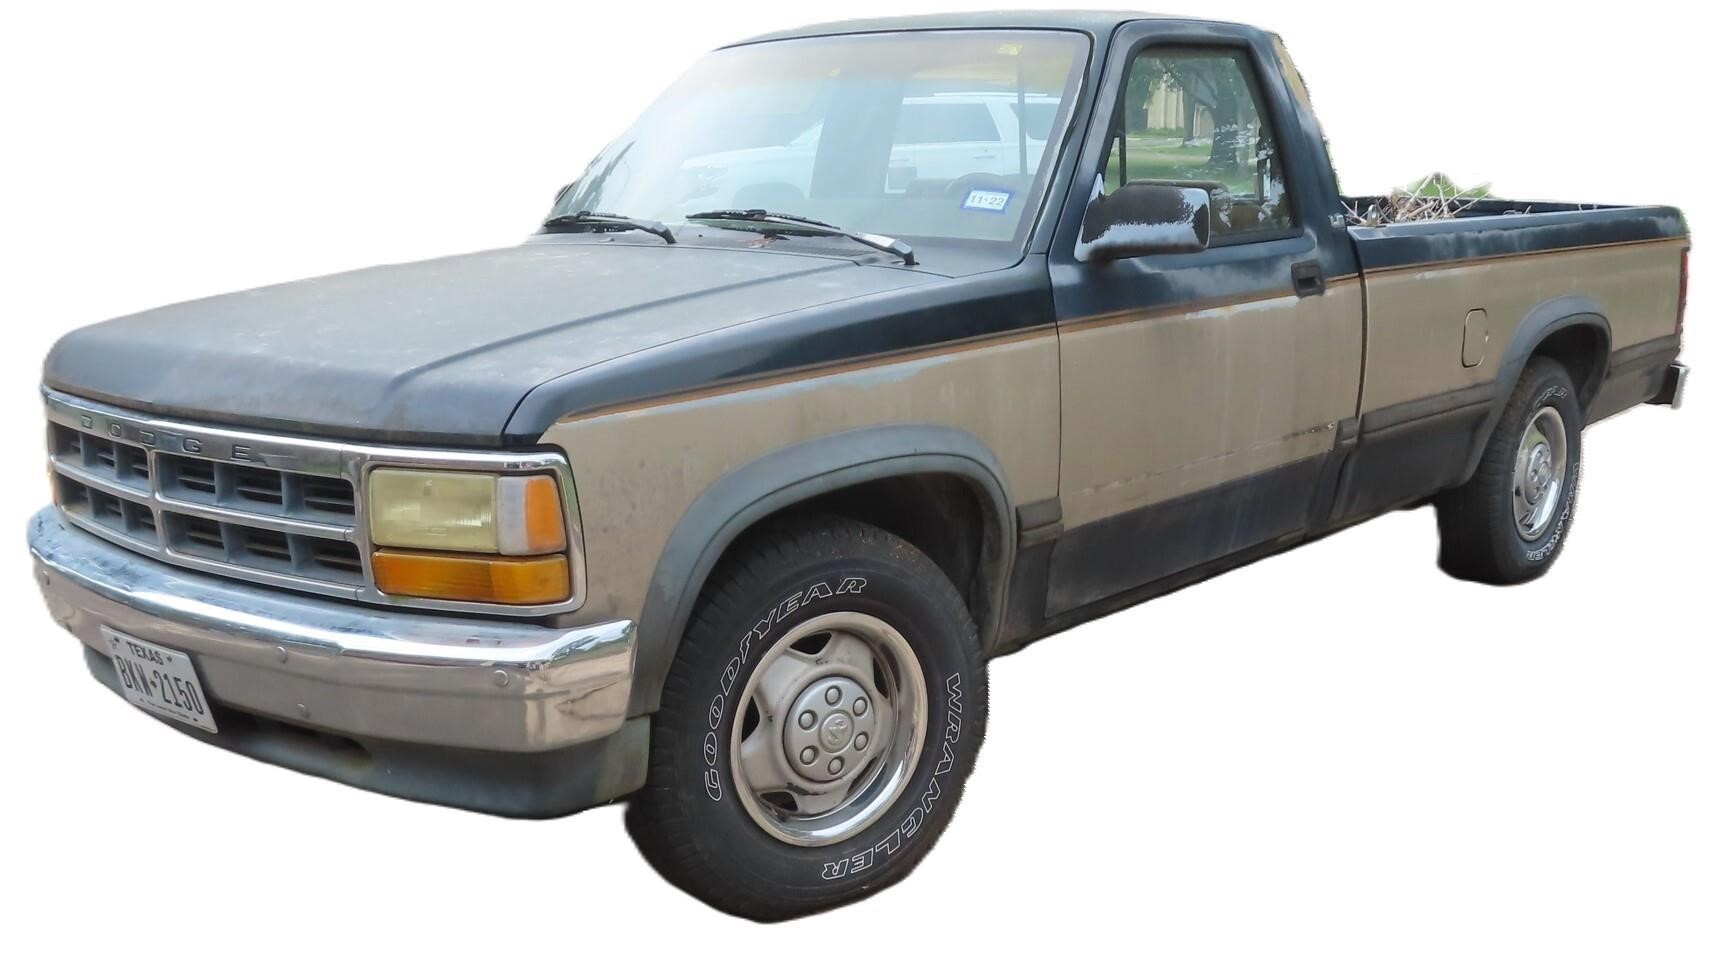 1992 Dodge Dakota, 108,462 miles, LE